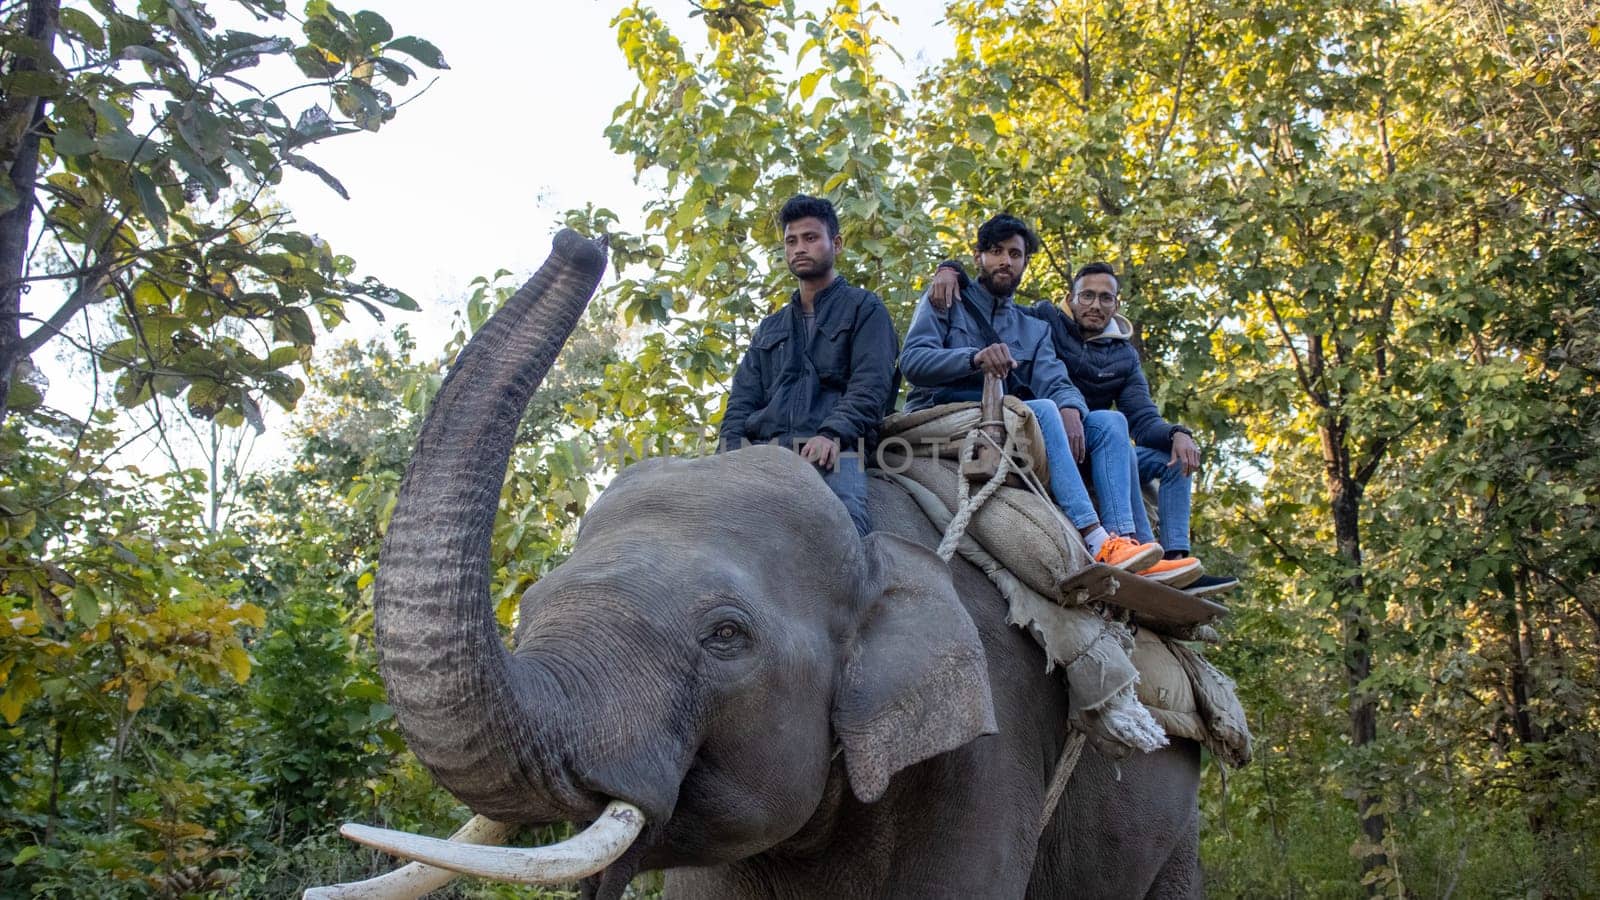 Capturing the Graceful Harmony of Elephants in Uttarakhand's Jungles by stocksvids